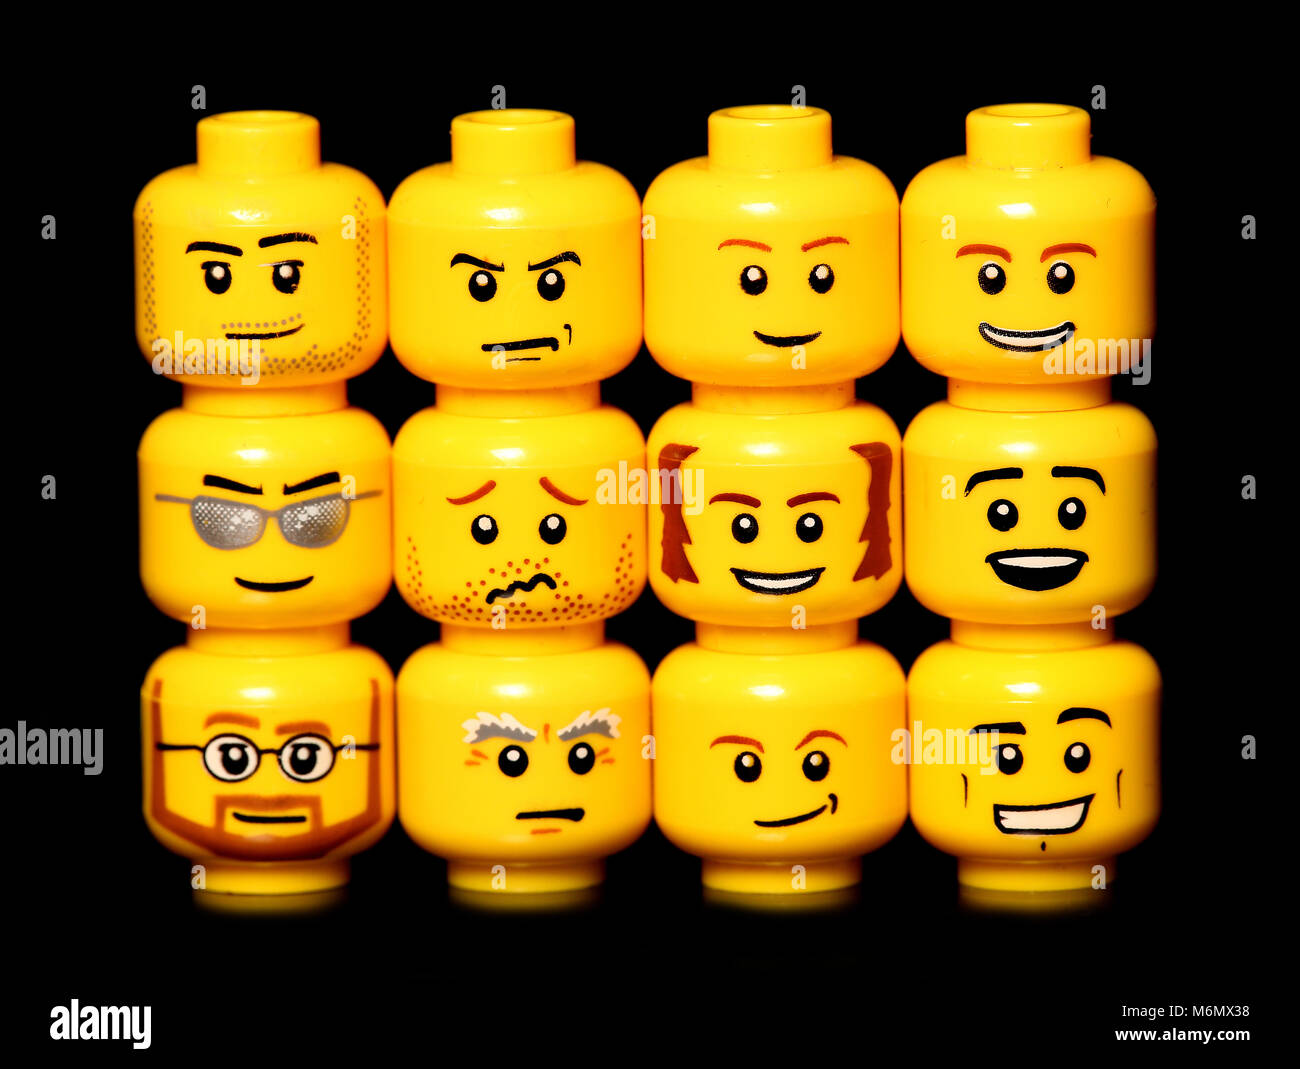 Cabeza De Lego Fotos e Imágenes de stock - Alamy